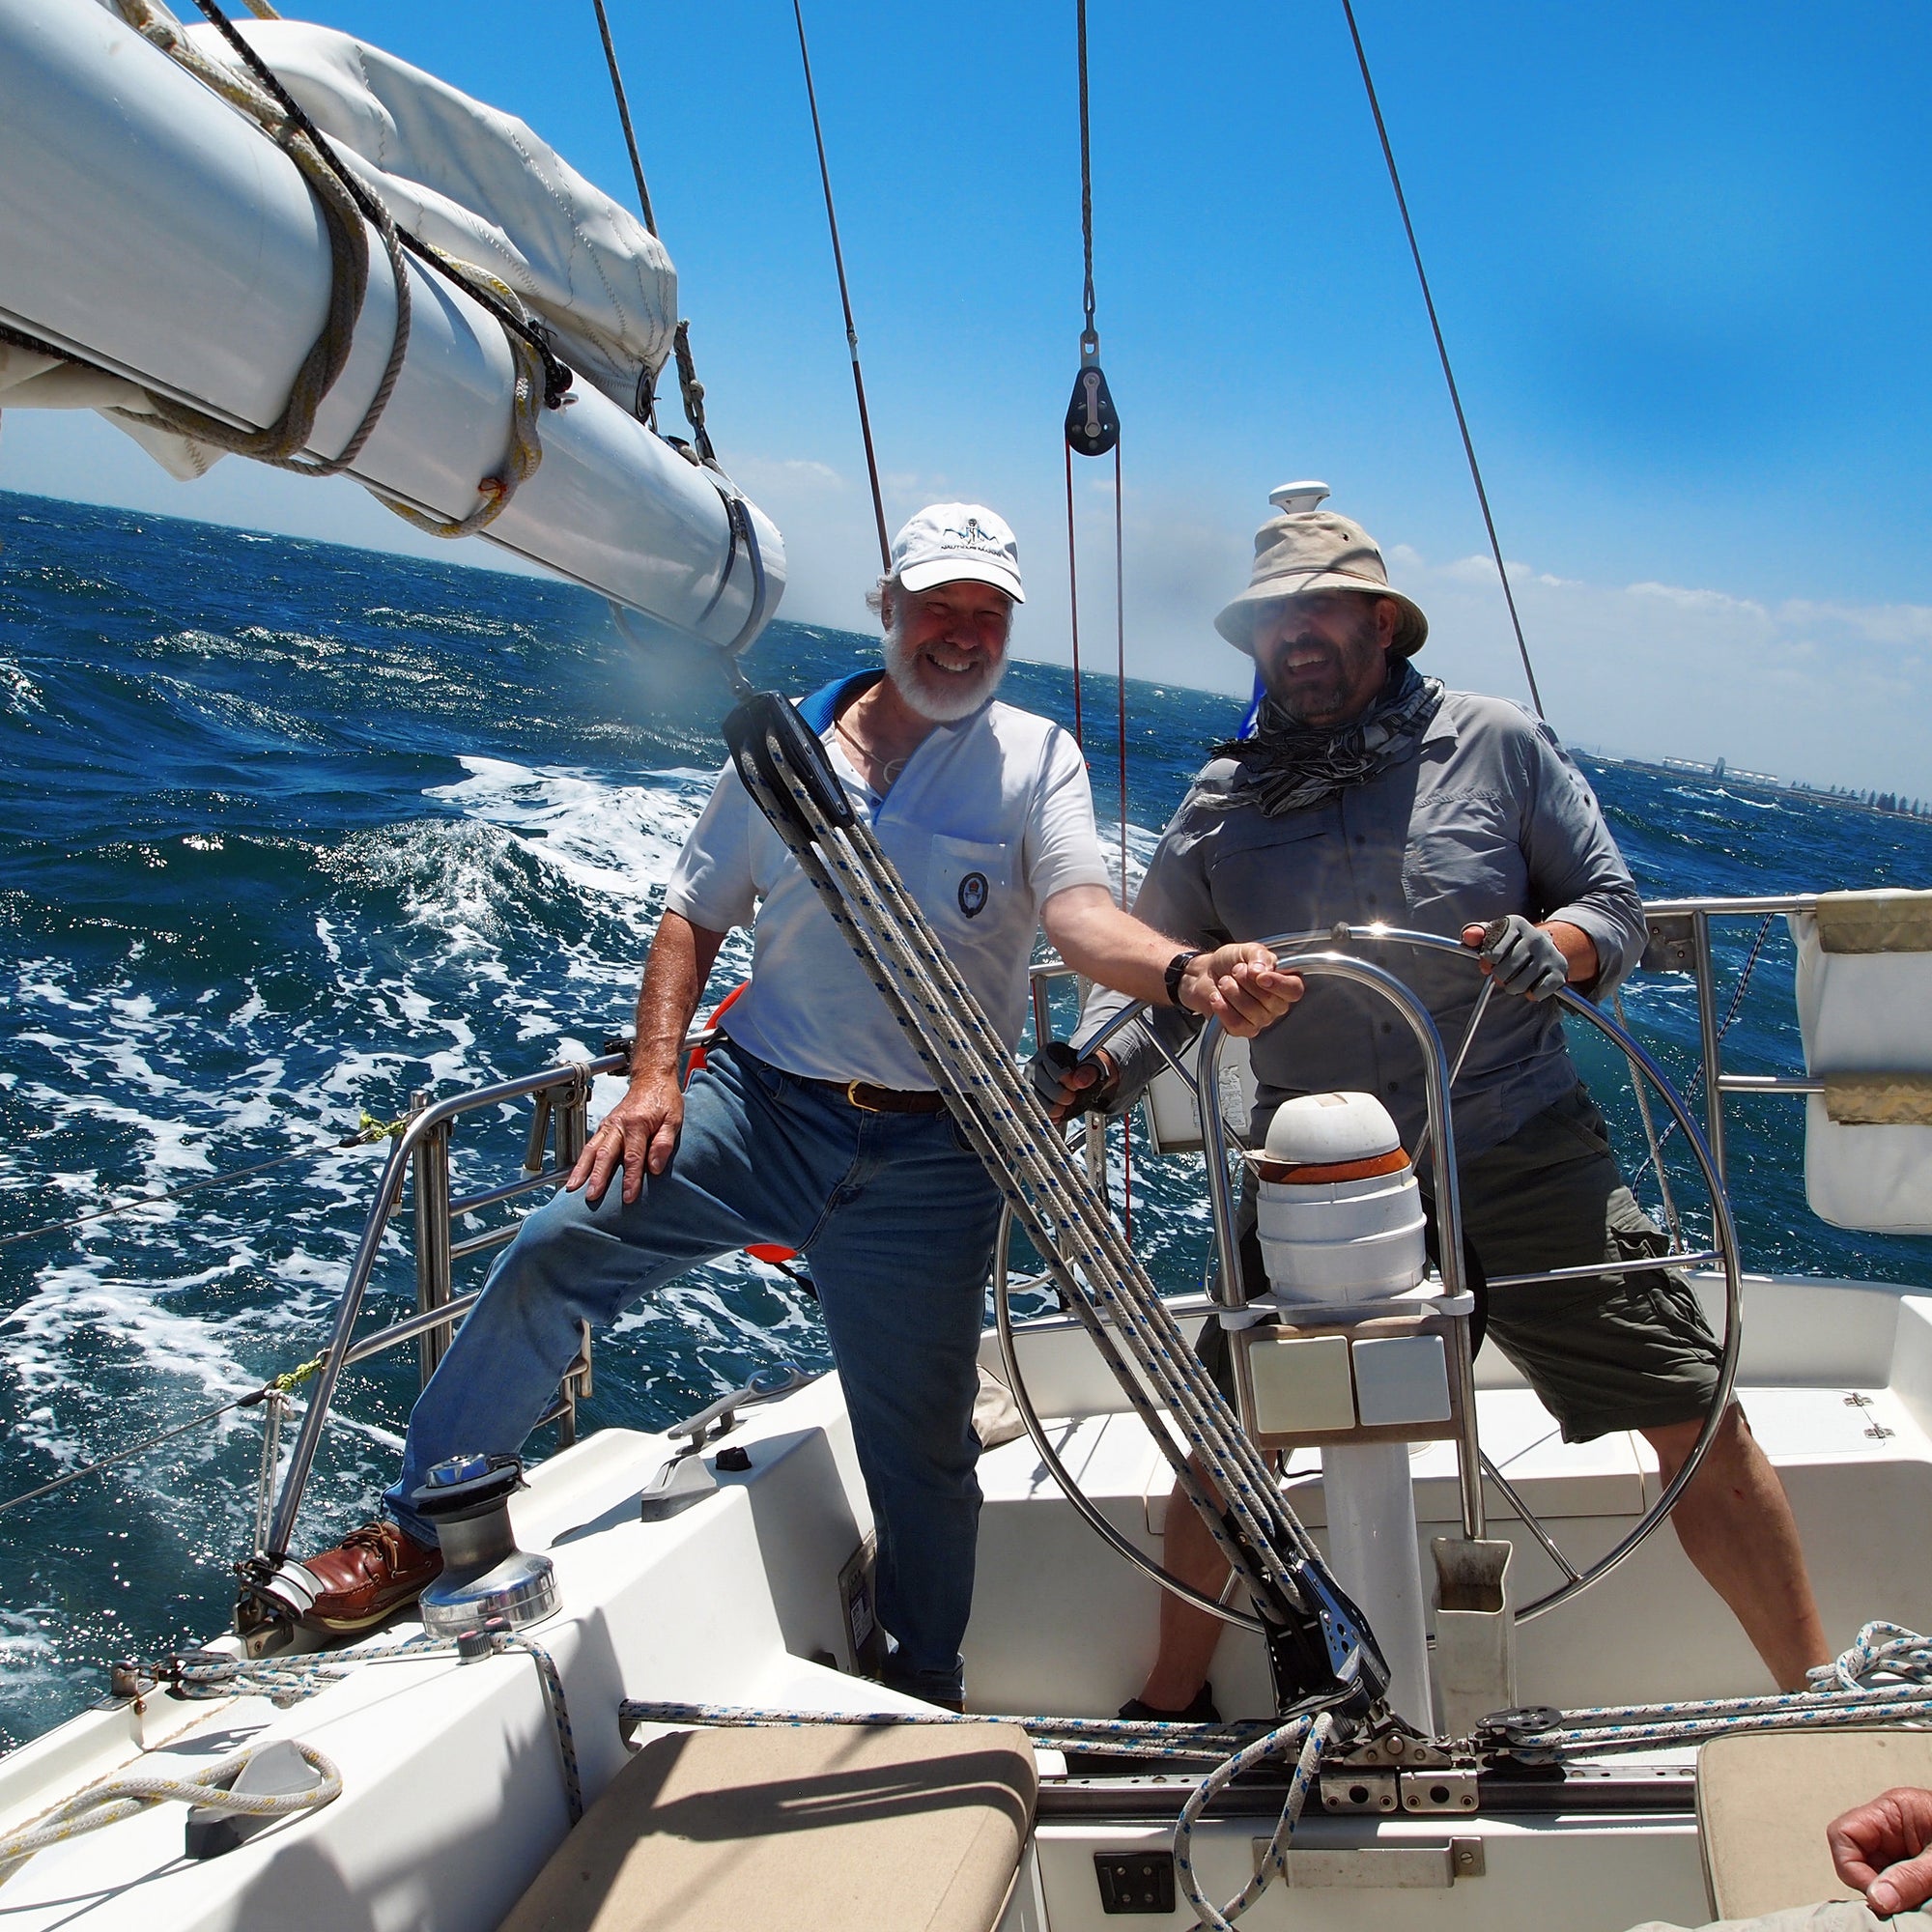 Designer-maker Farley and friend Arthur aboard the yacht Teal II